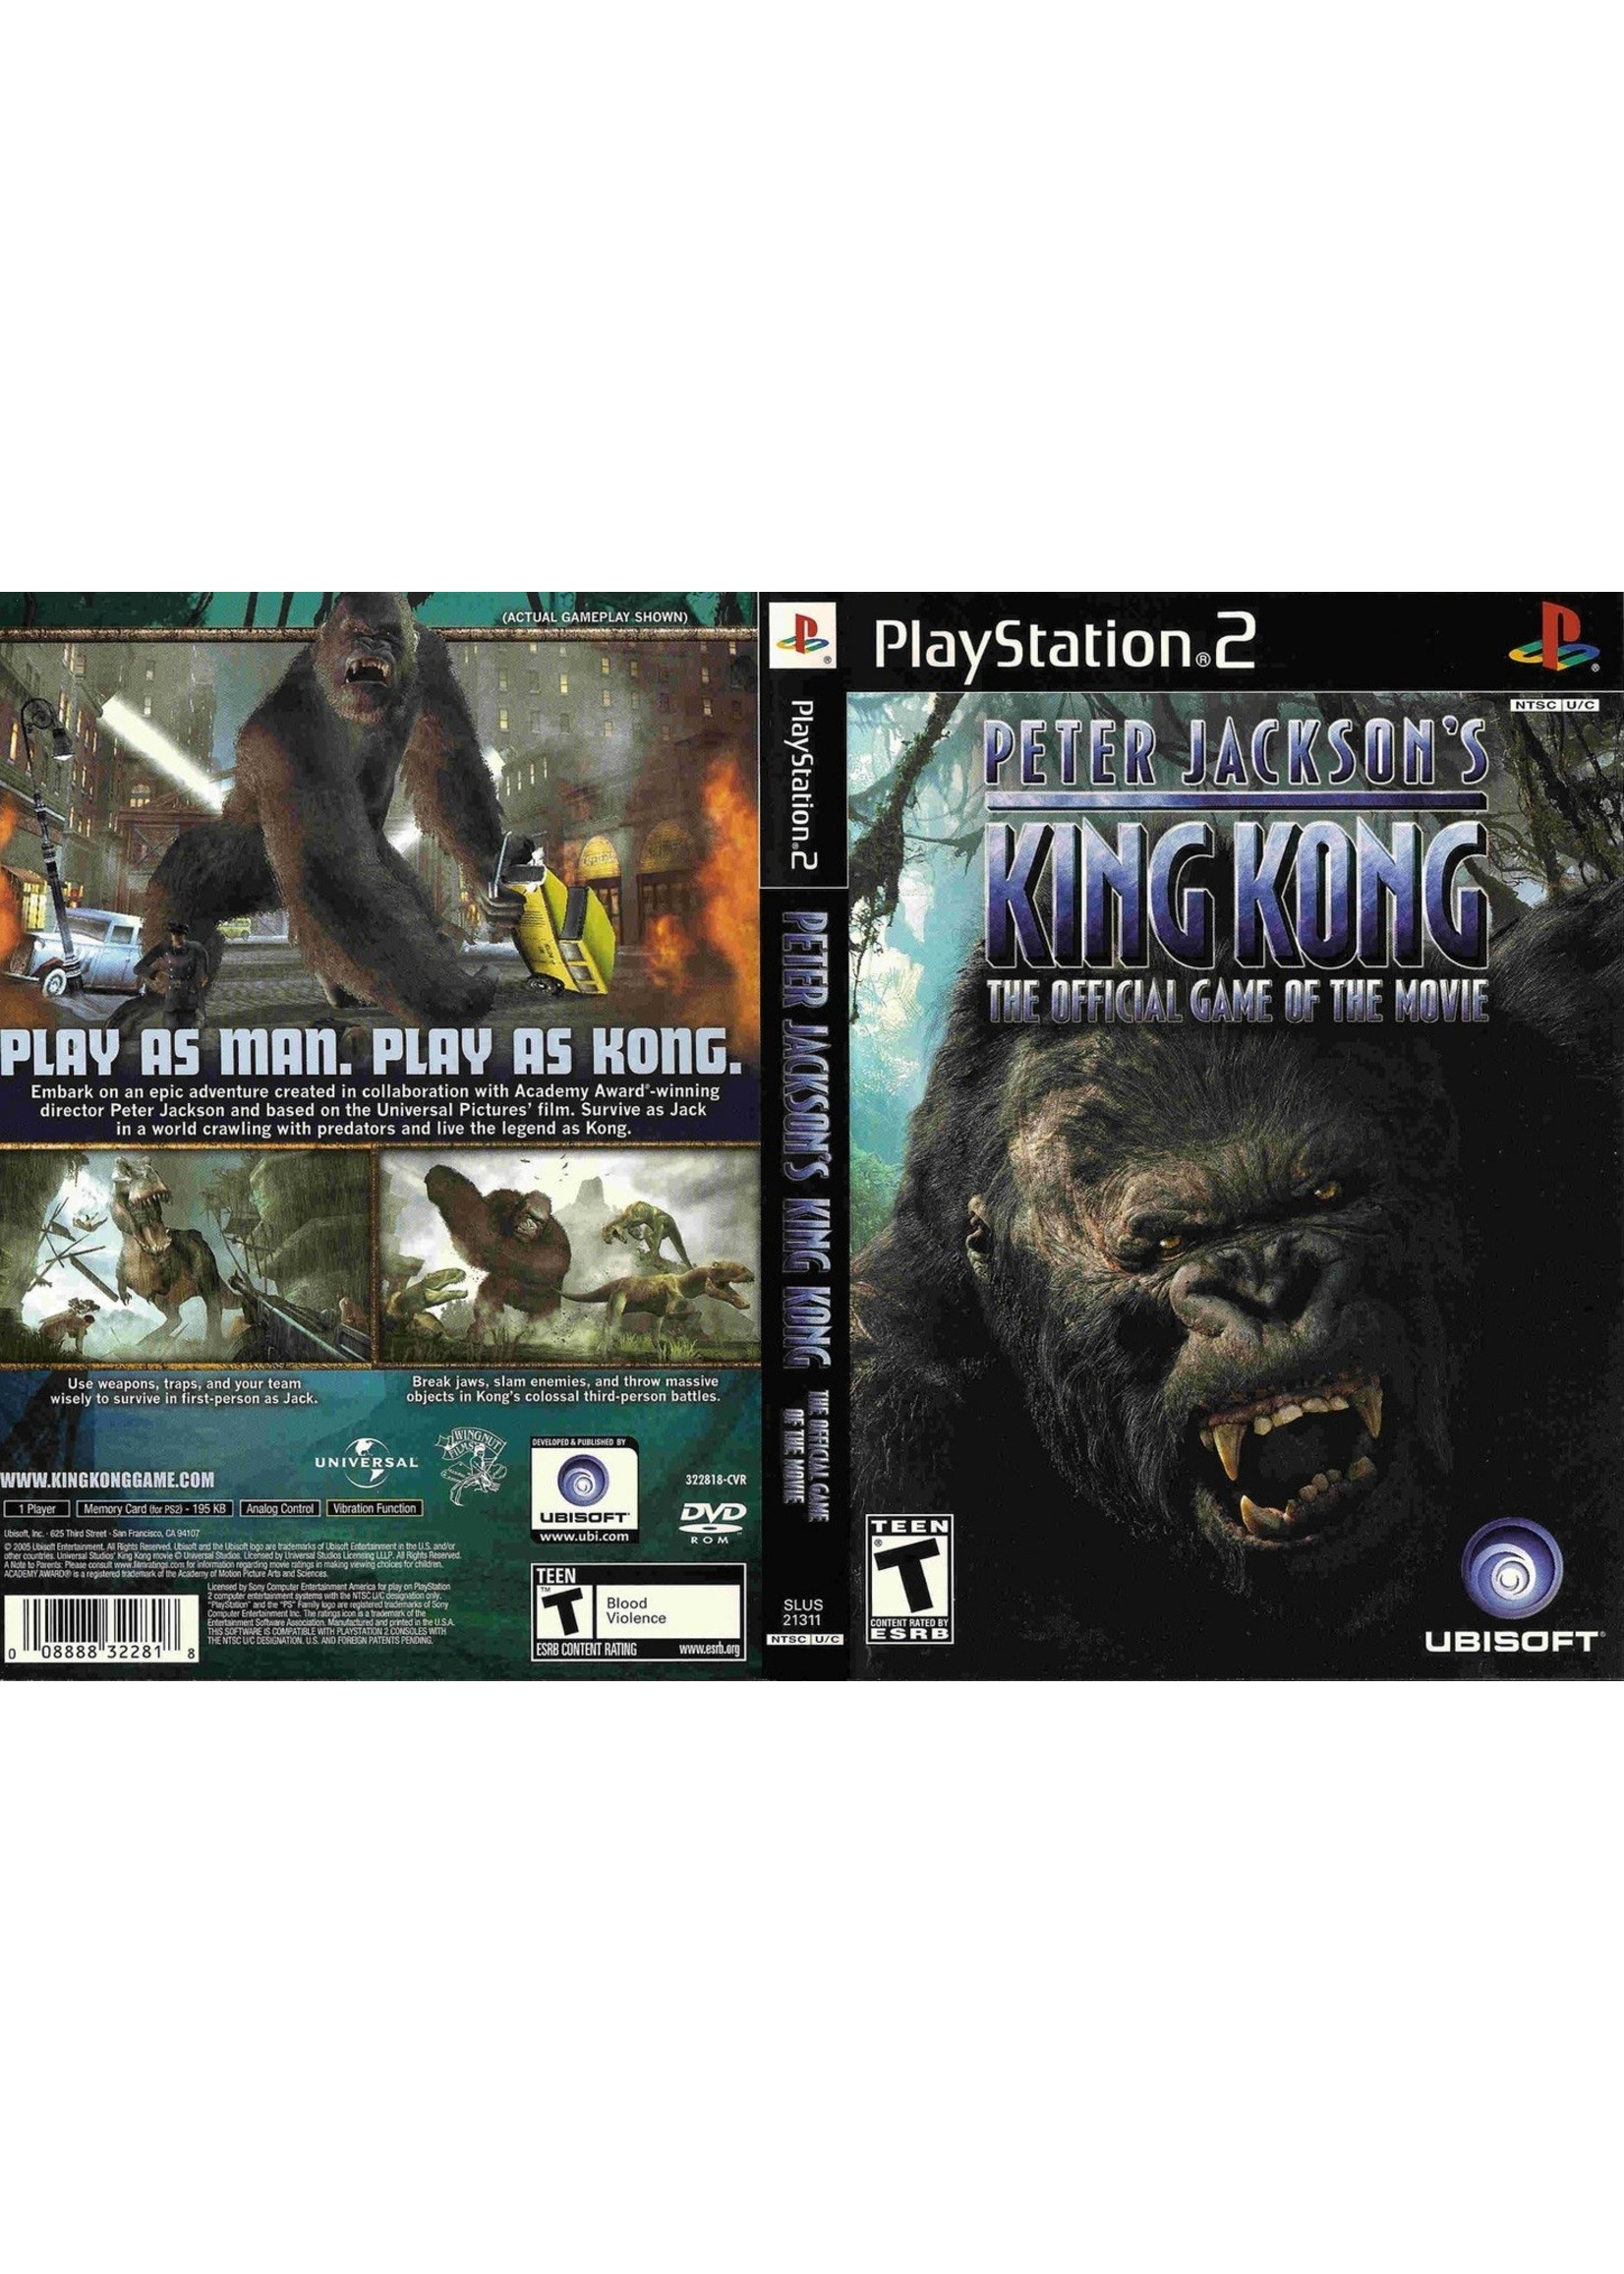 Sony Playstation 2 (PS2) Peter Jackson's King Kong